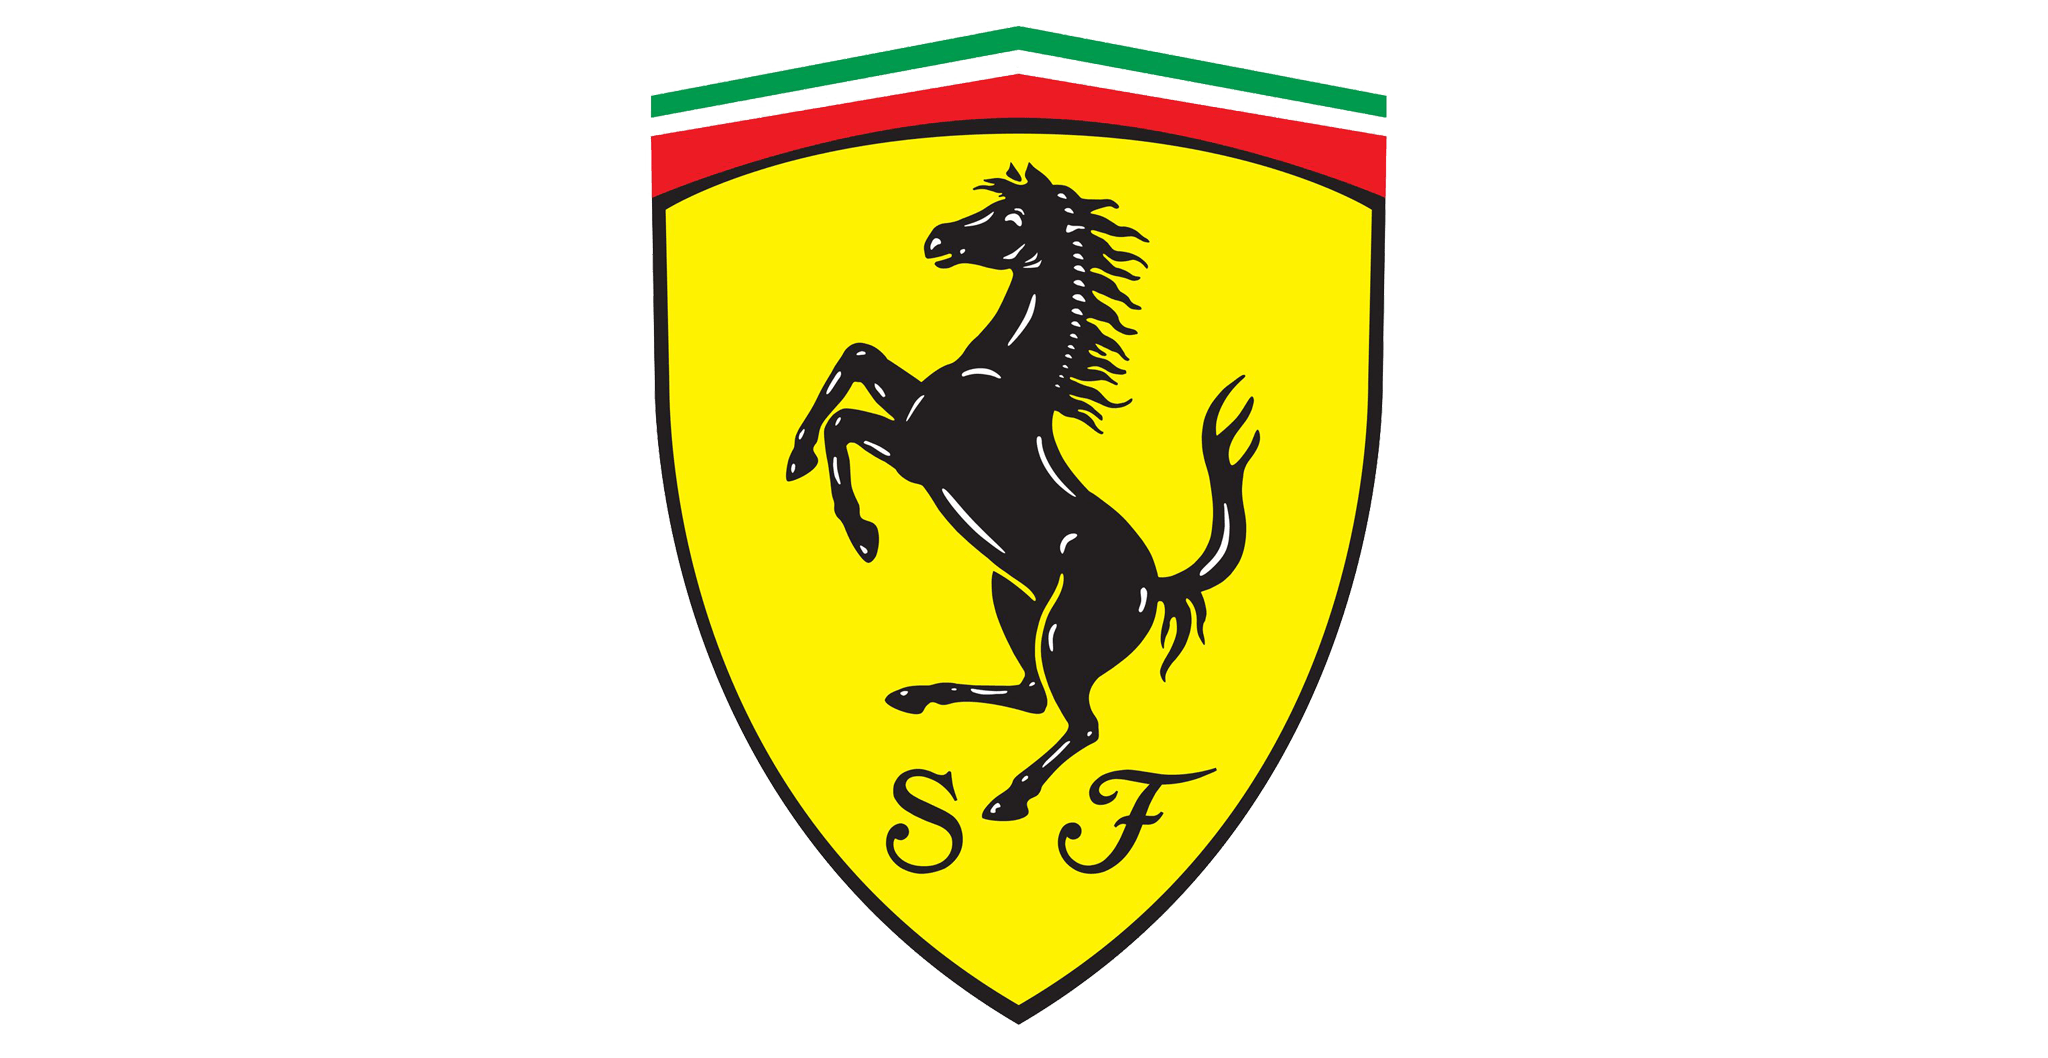 Stallion Car Logo - Ferrari Logo Meaning and History, latest models | World Cars Brands